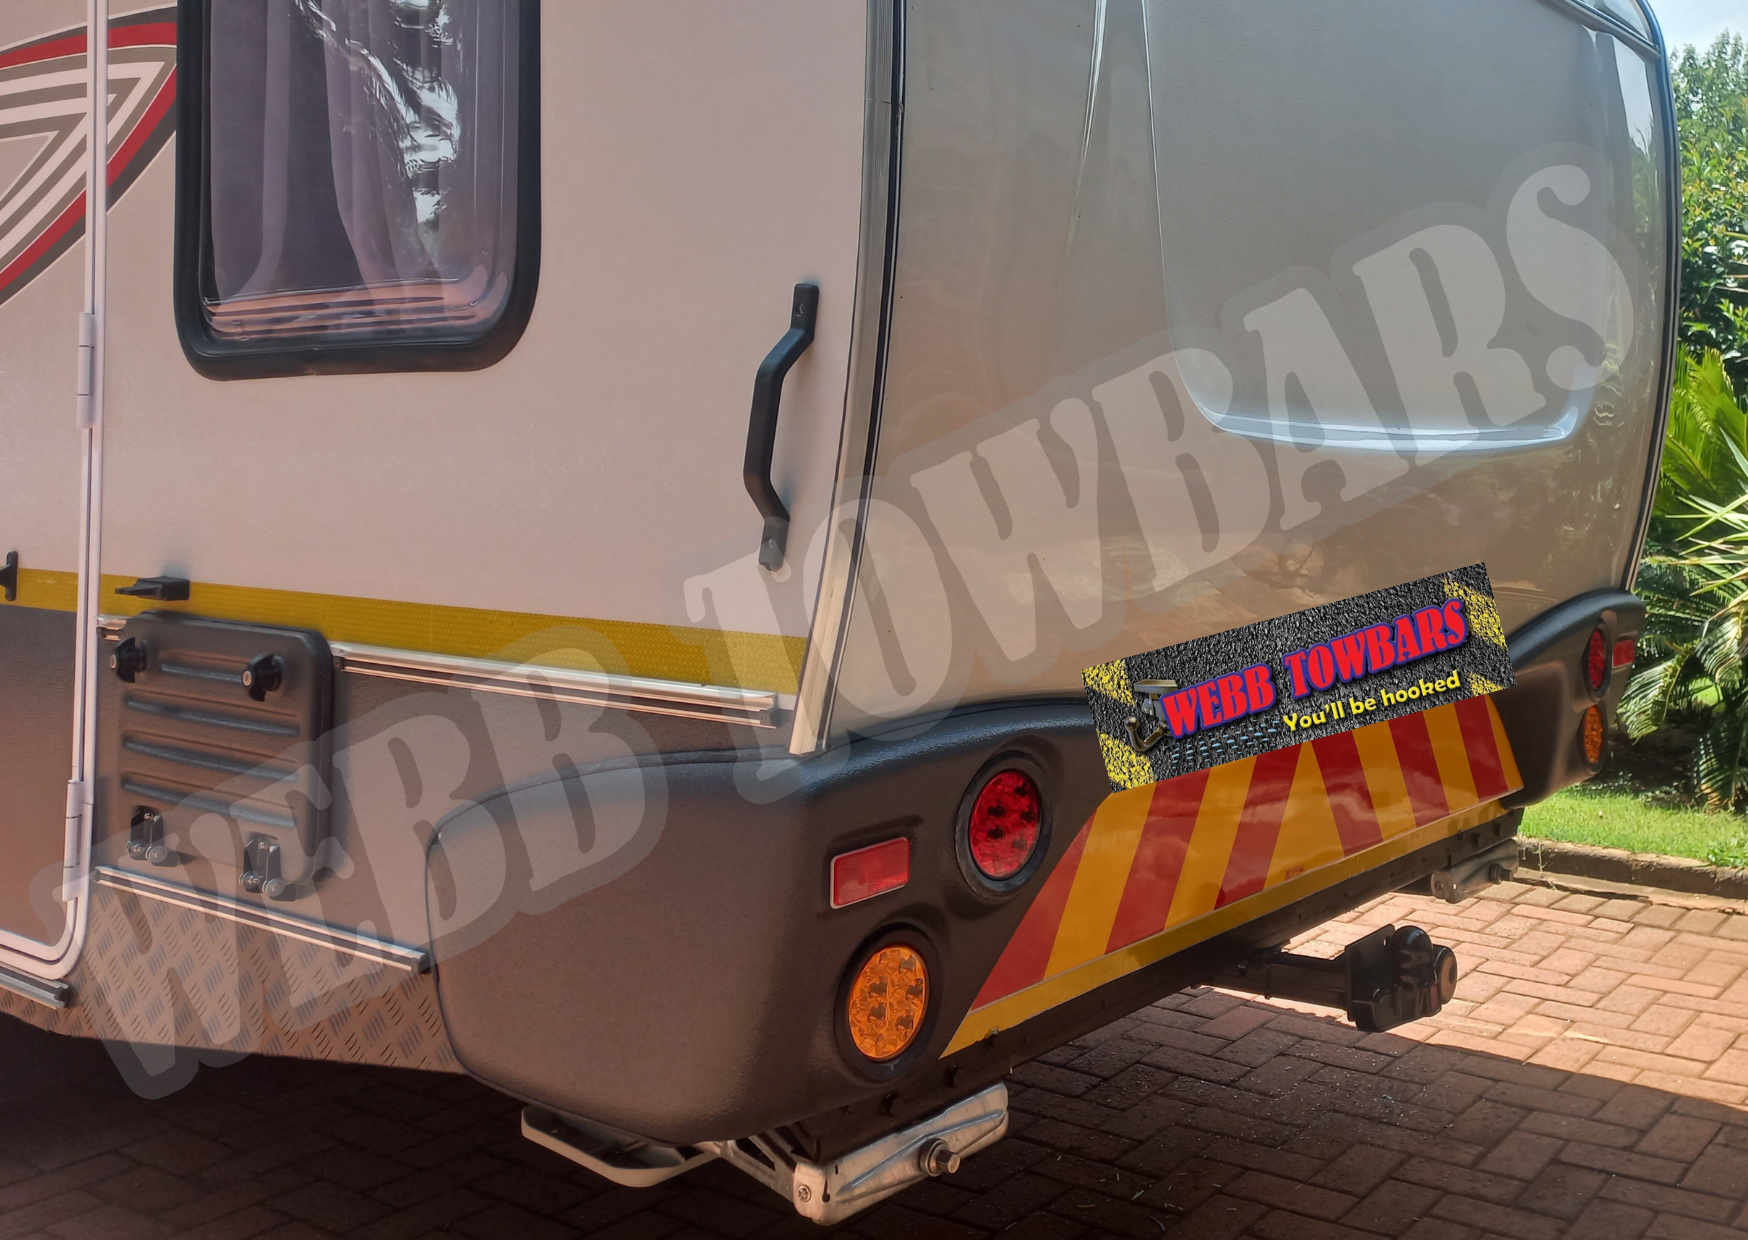 Sprite Tourer SX Eduro Caravan - Standard Towbar by Webb Towbars Gauteng, South Africa - Reliable Towing Solution for Your Sprite Caravan Adventures